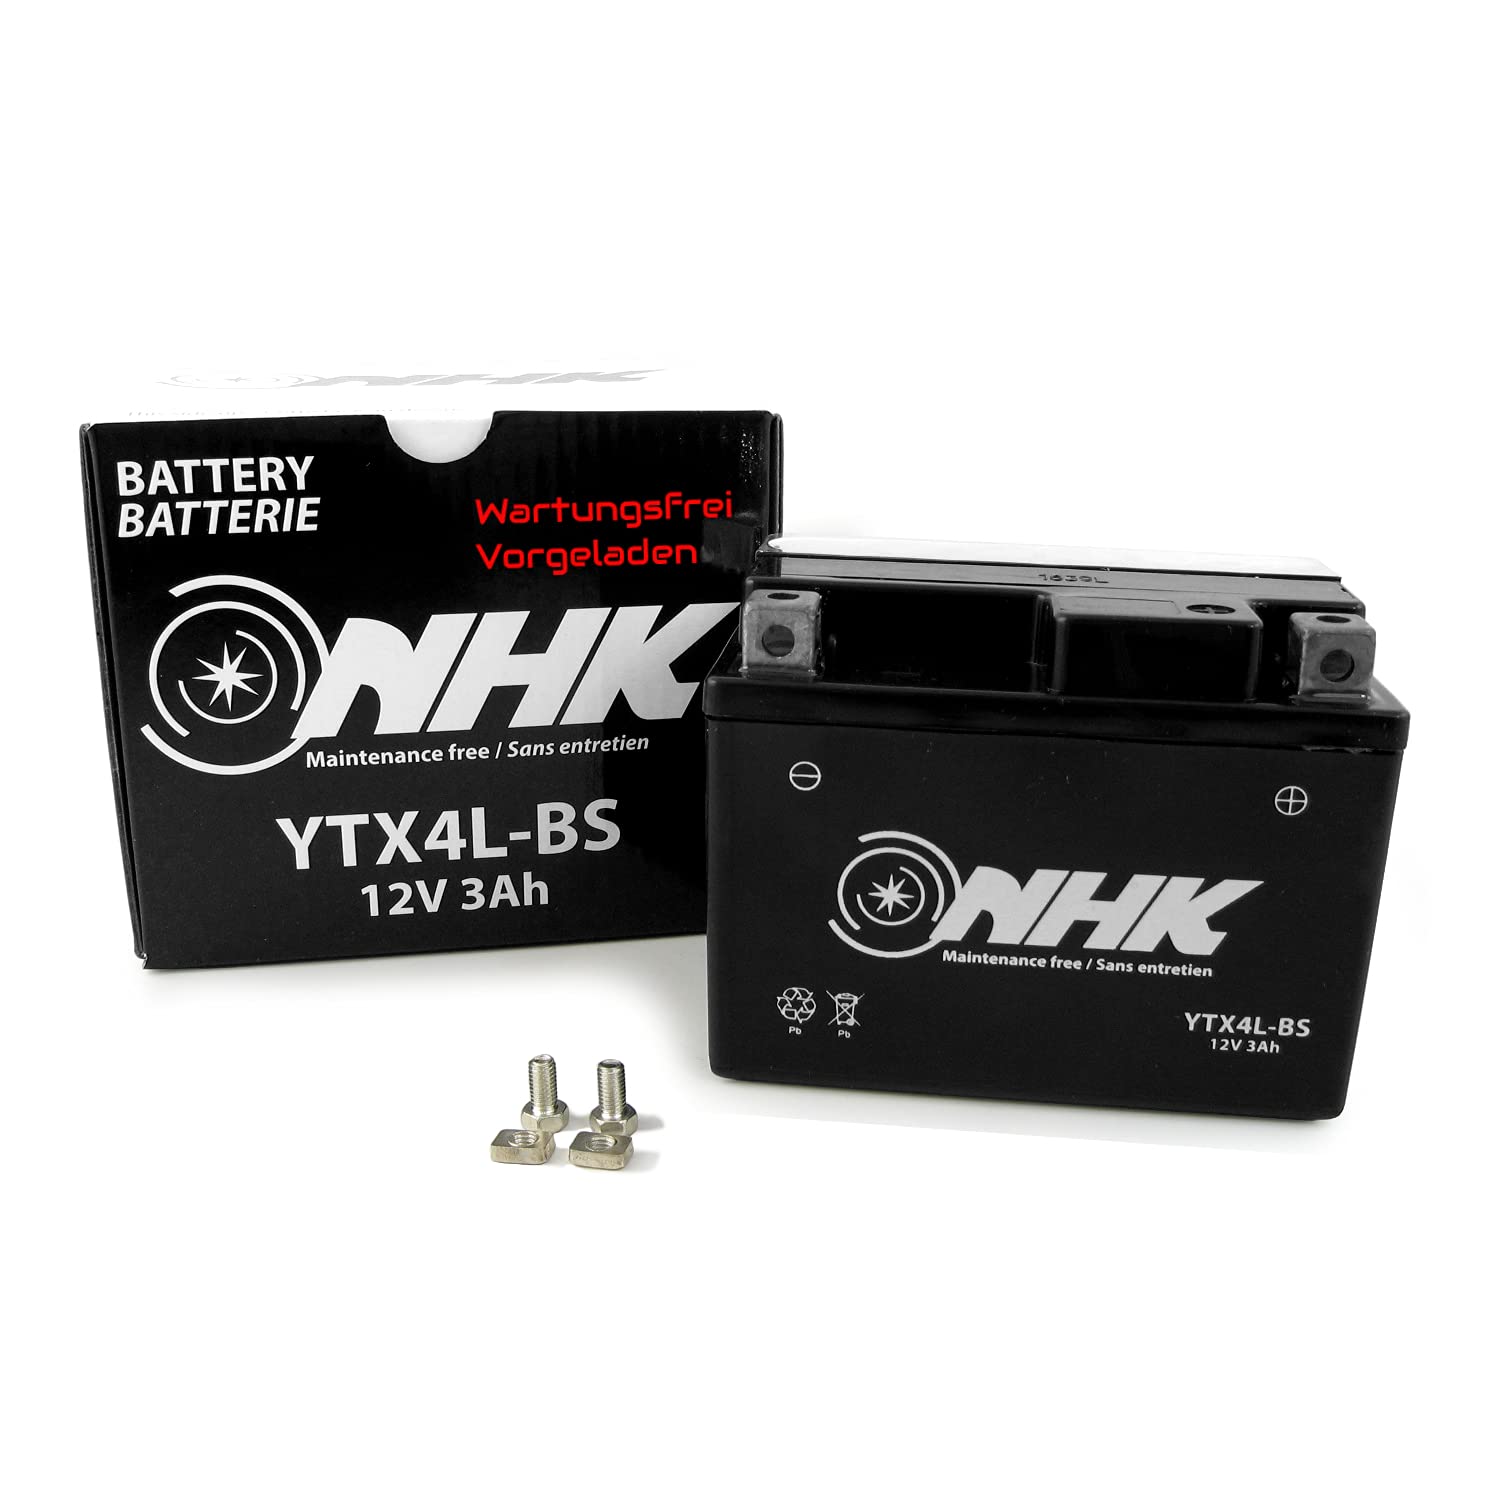 Wartungsfreie Batterie 3Ah kompatibel mit Piaggio Zip SSL 25 TT AC 92-96 SSL1T (YTX4L-BS) von Area Longboard